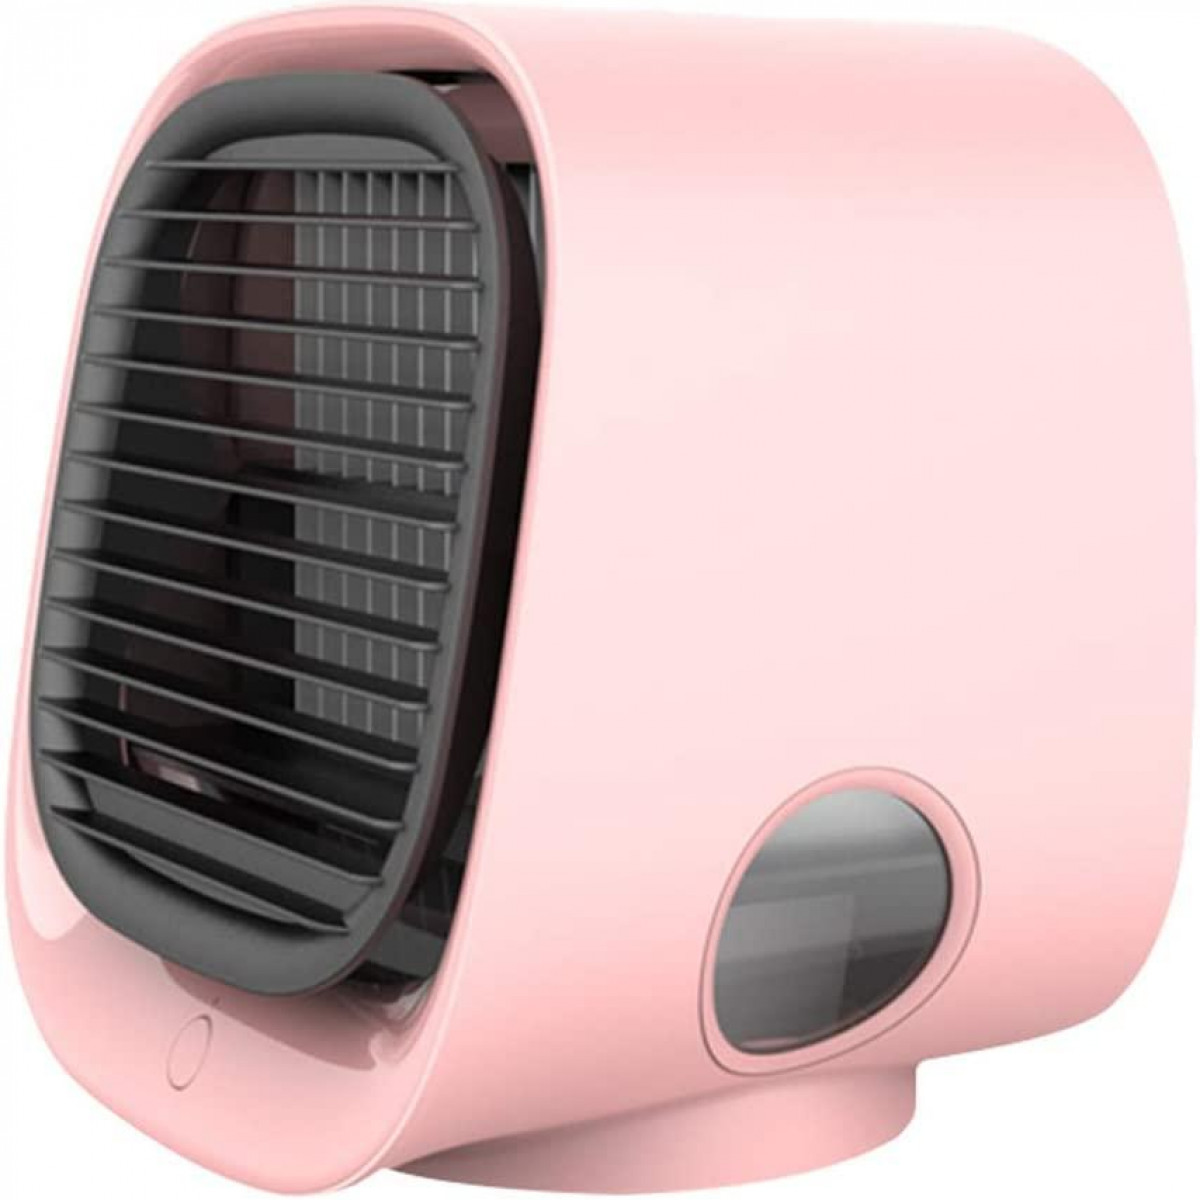 mit m²) 4-in-1-Lüfter Rosa 10 INF Luftkühler (Raumgröße: / Luftbefeuchter Rosa LED Luftkühler / Luftreiniger